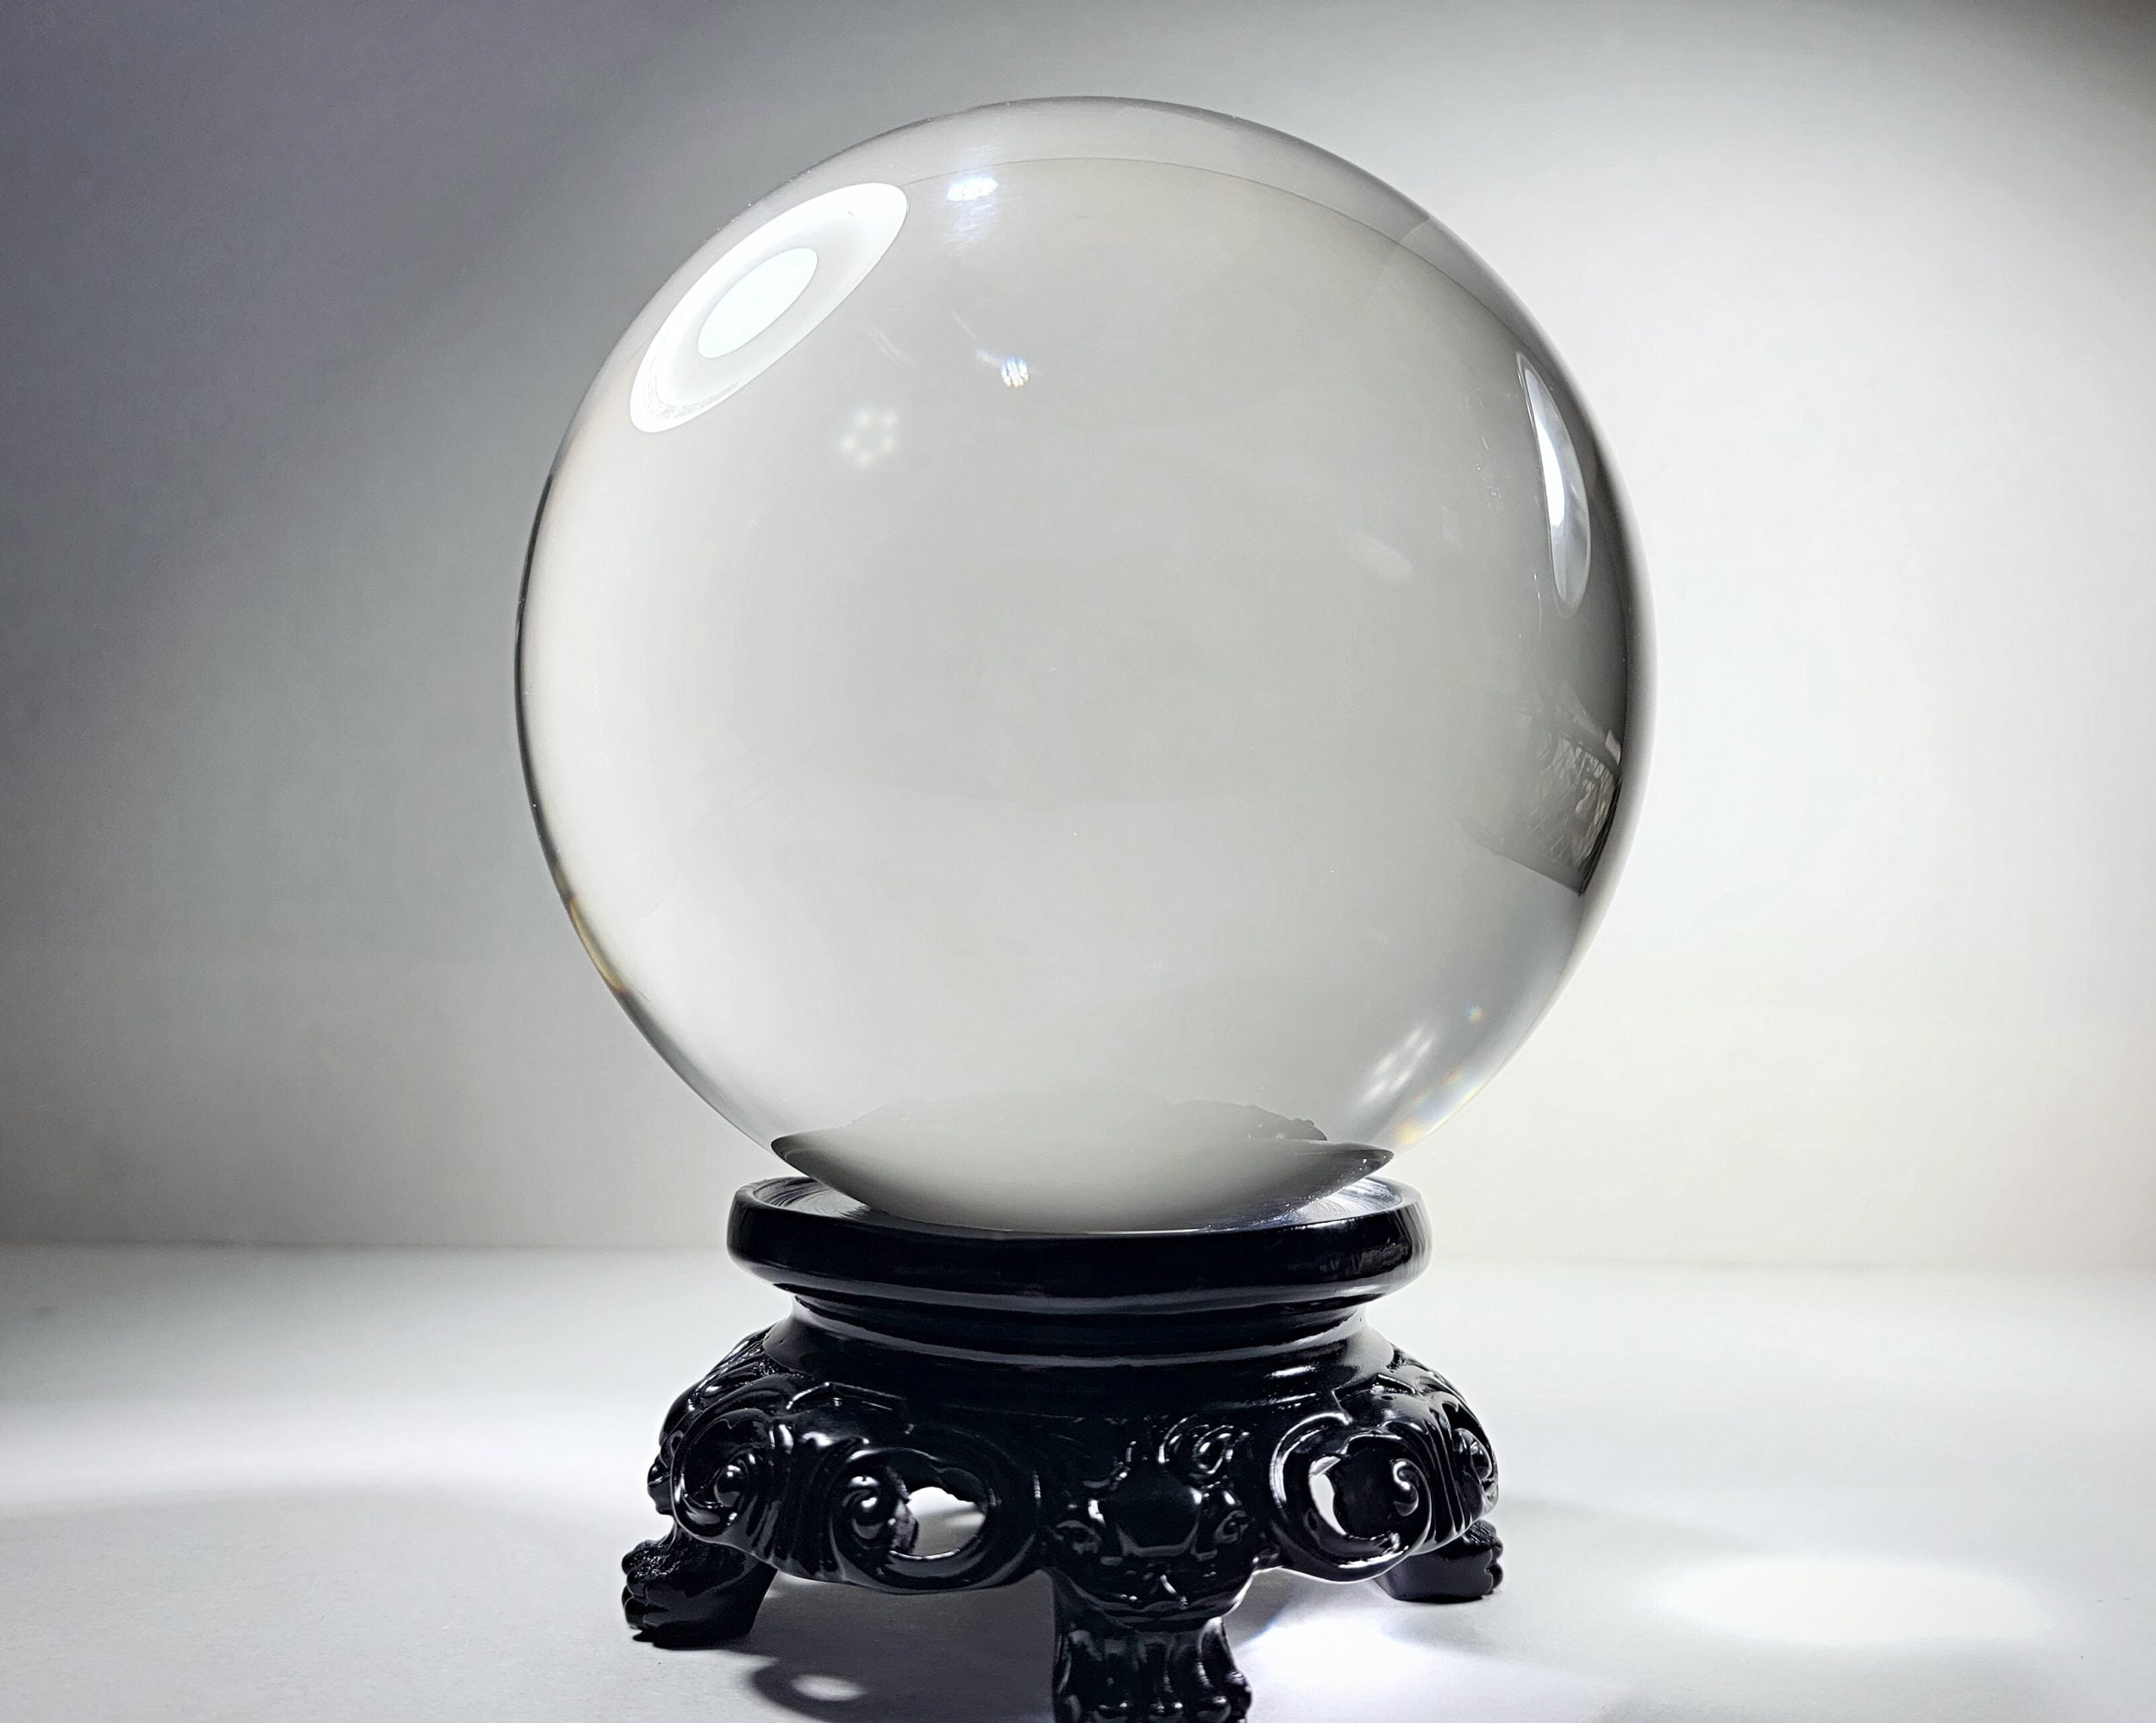 80mm Crystal Ball, Large Quartz Ball, Glass Sphere